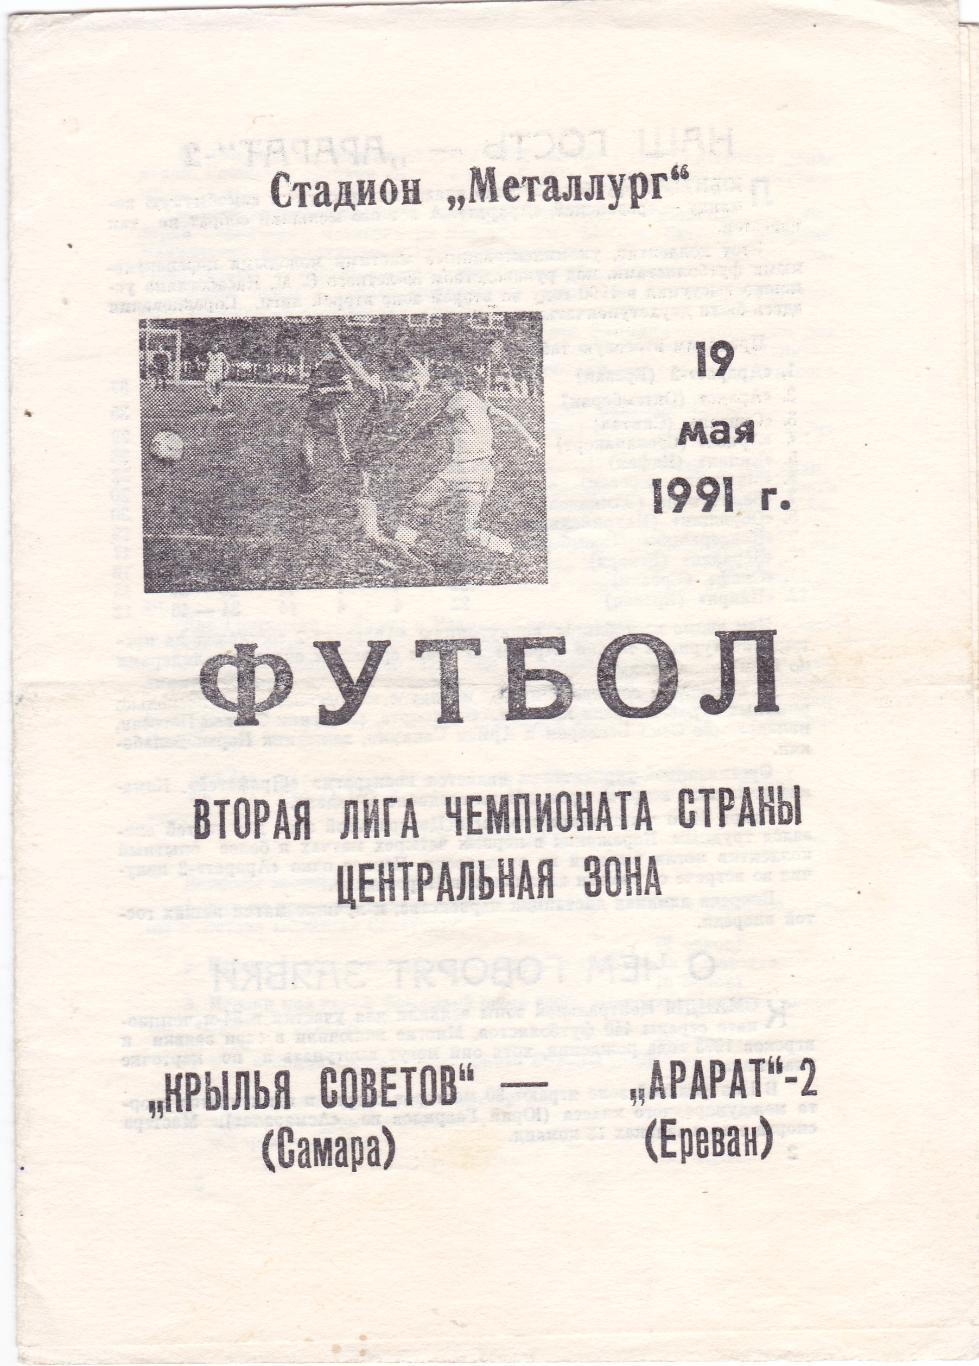 Крылья Советов (Самара) - Арарат-2 (Ереван) 19.05.1991